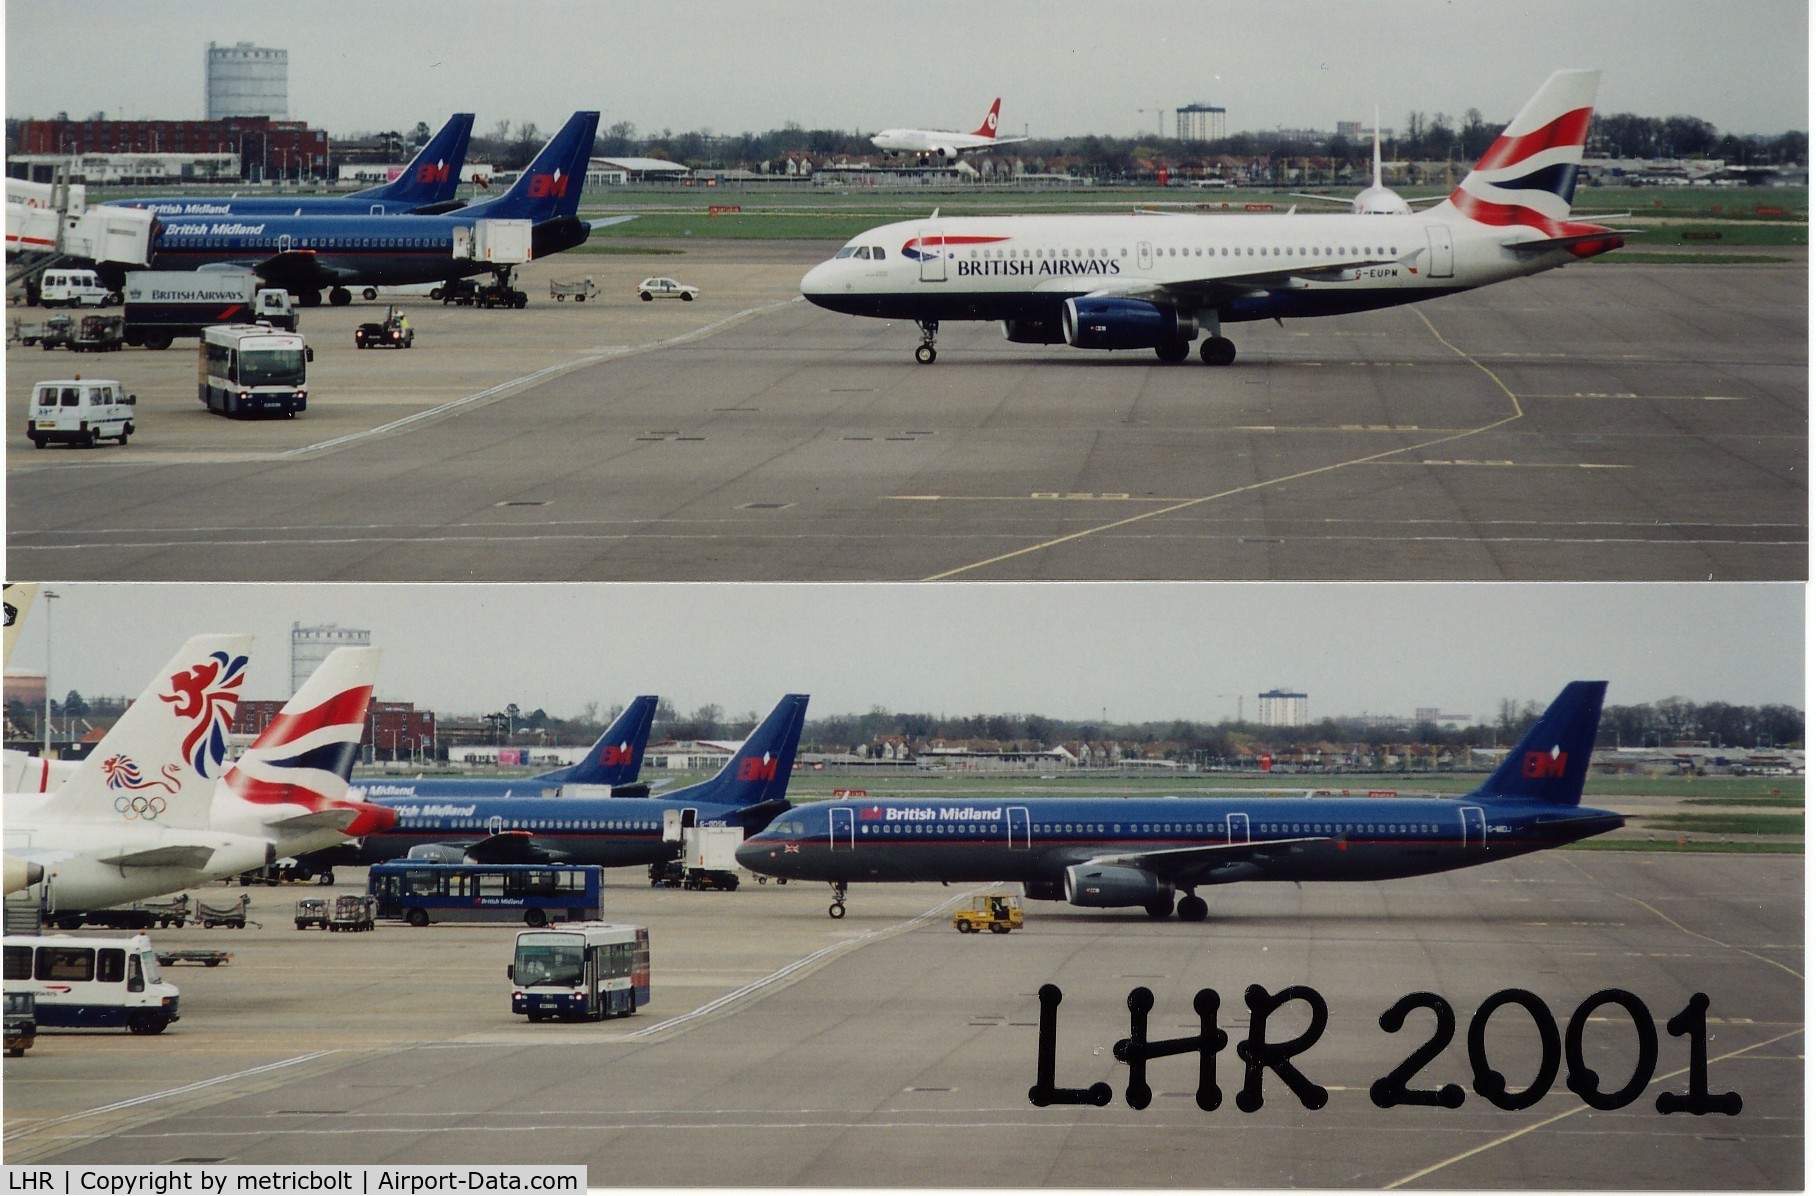 London Heathrow Airport, London, England United Kingdom (LHR) - Two photos of LHR in Apr.2001